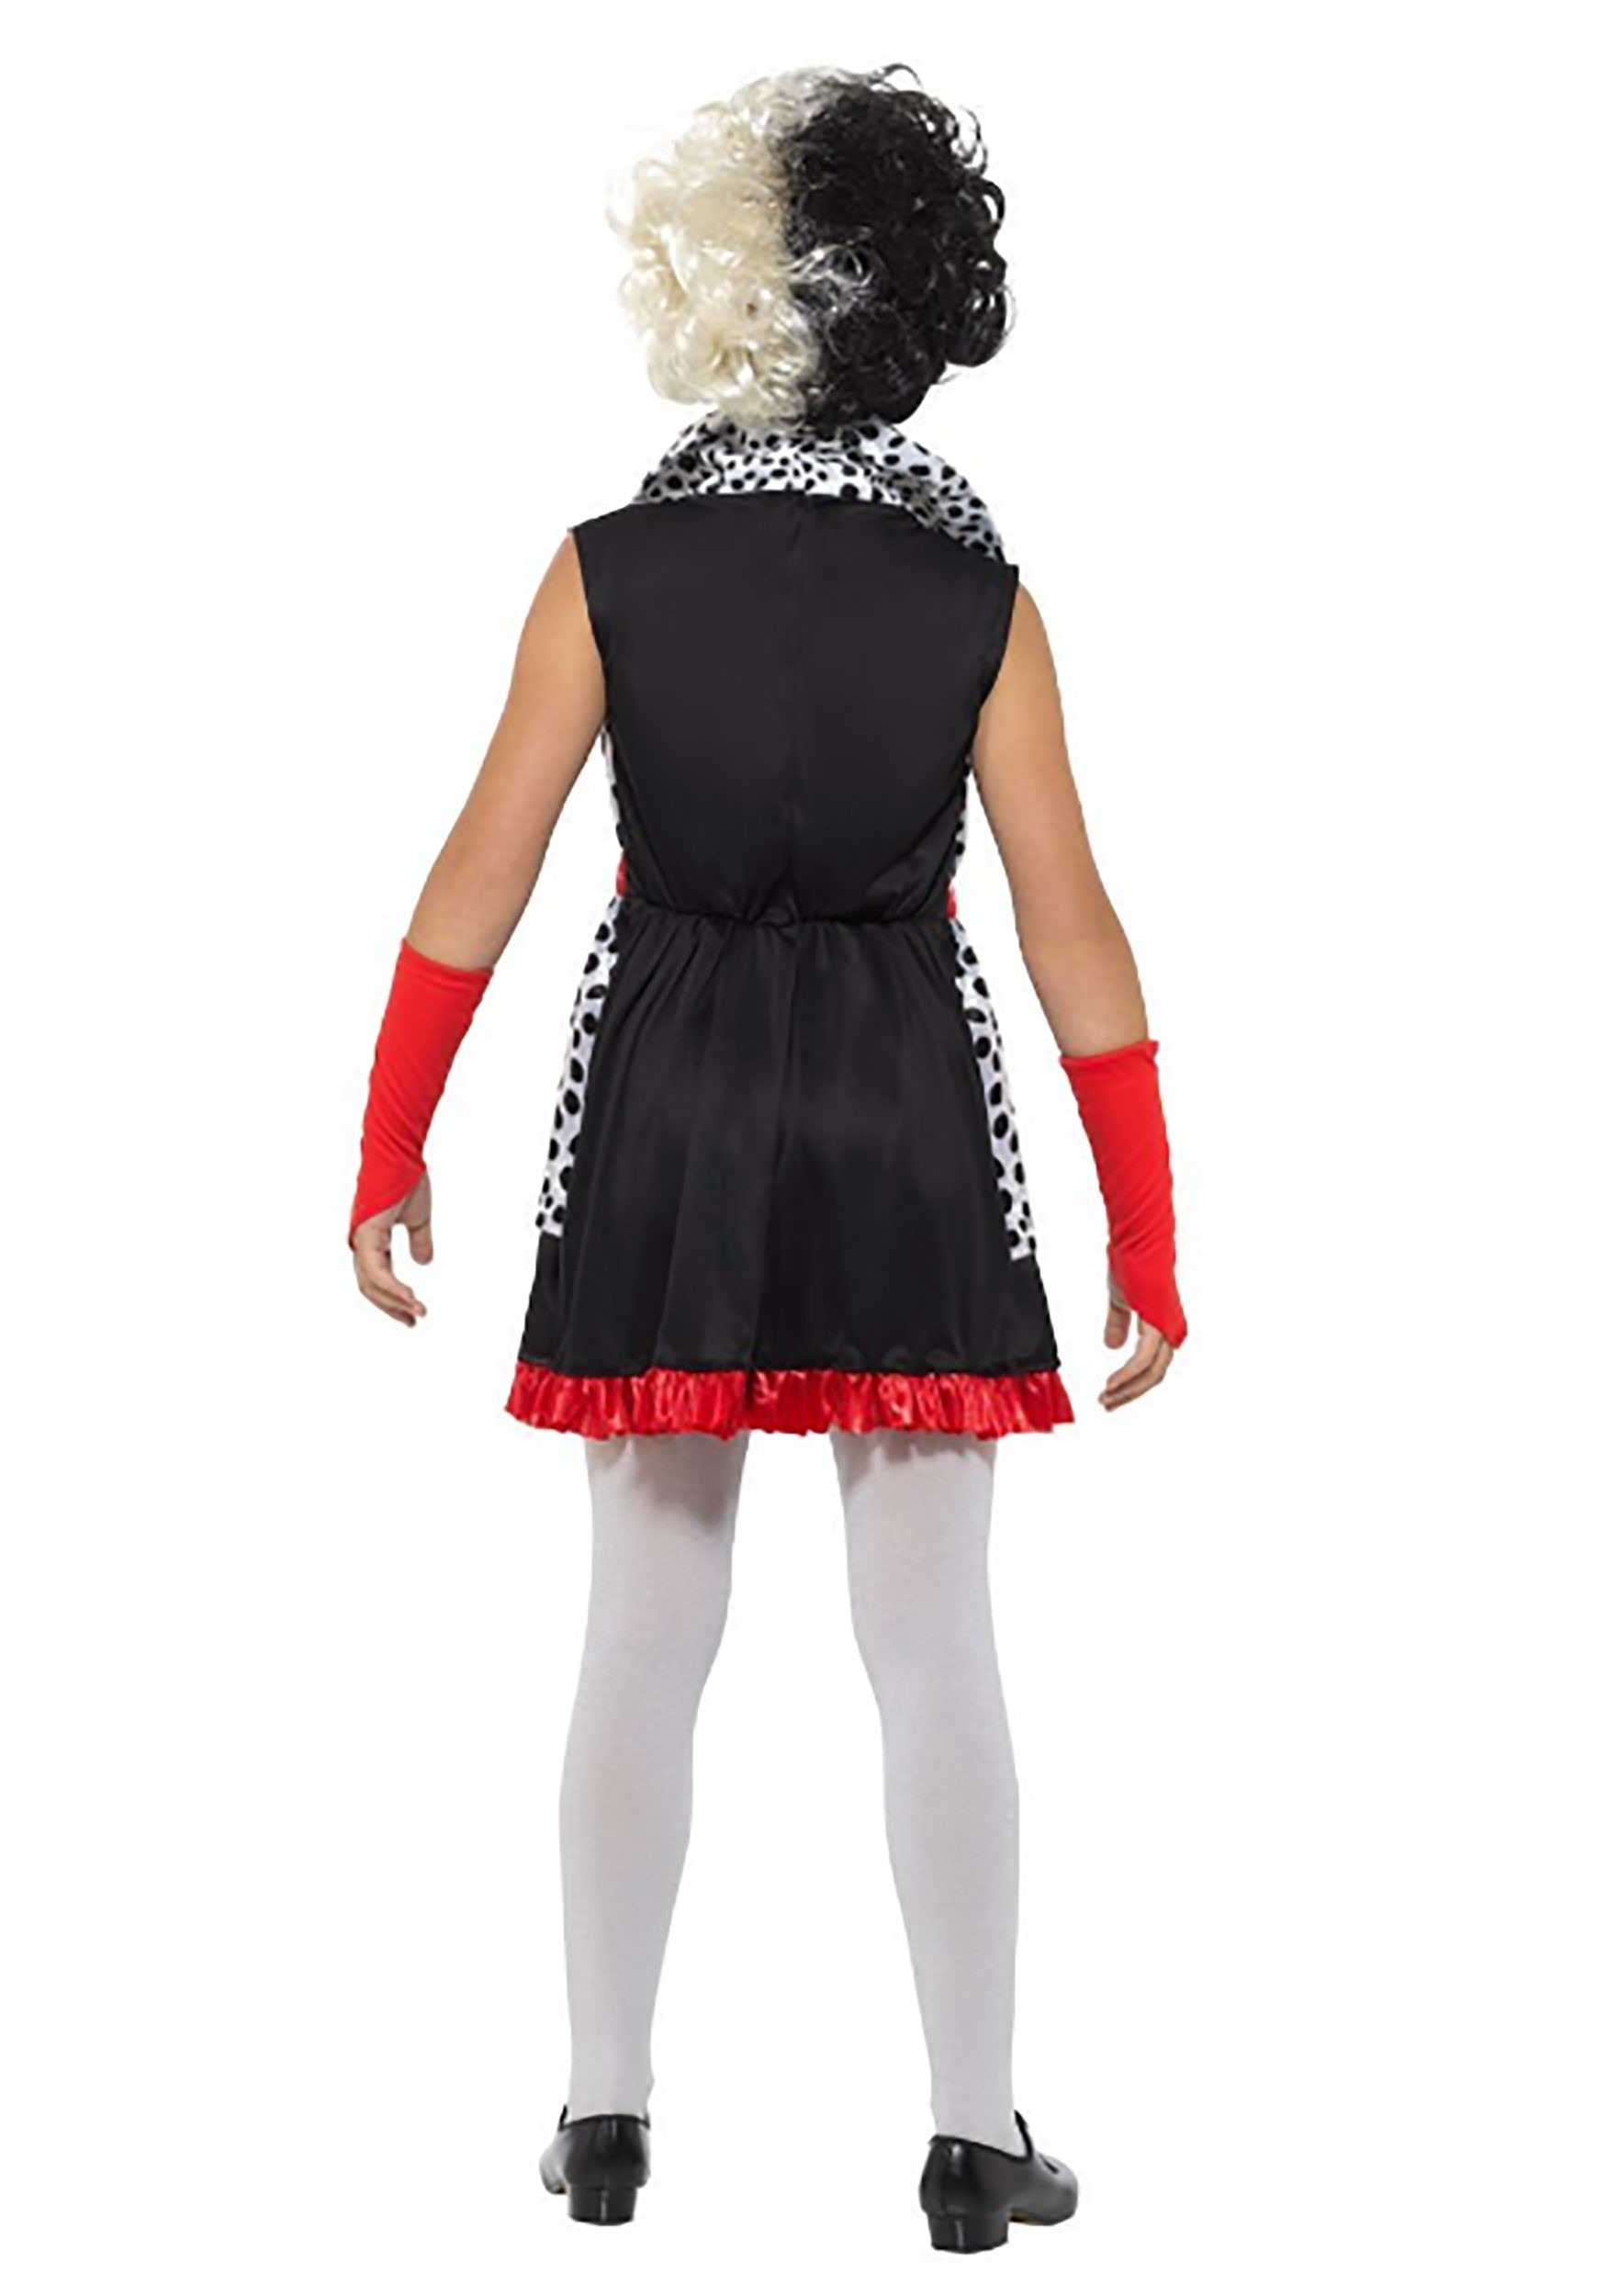 Cruella de Vil Cruella Live Action Red Dress Classic Adult Costume, Small  (4-6)